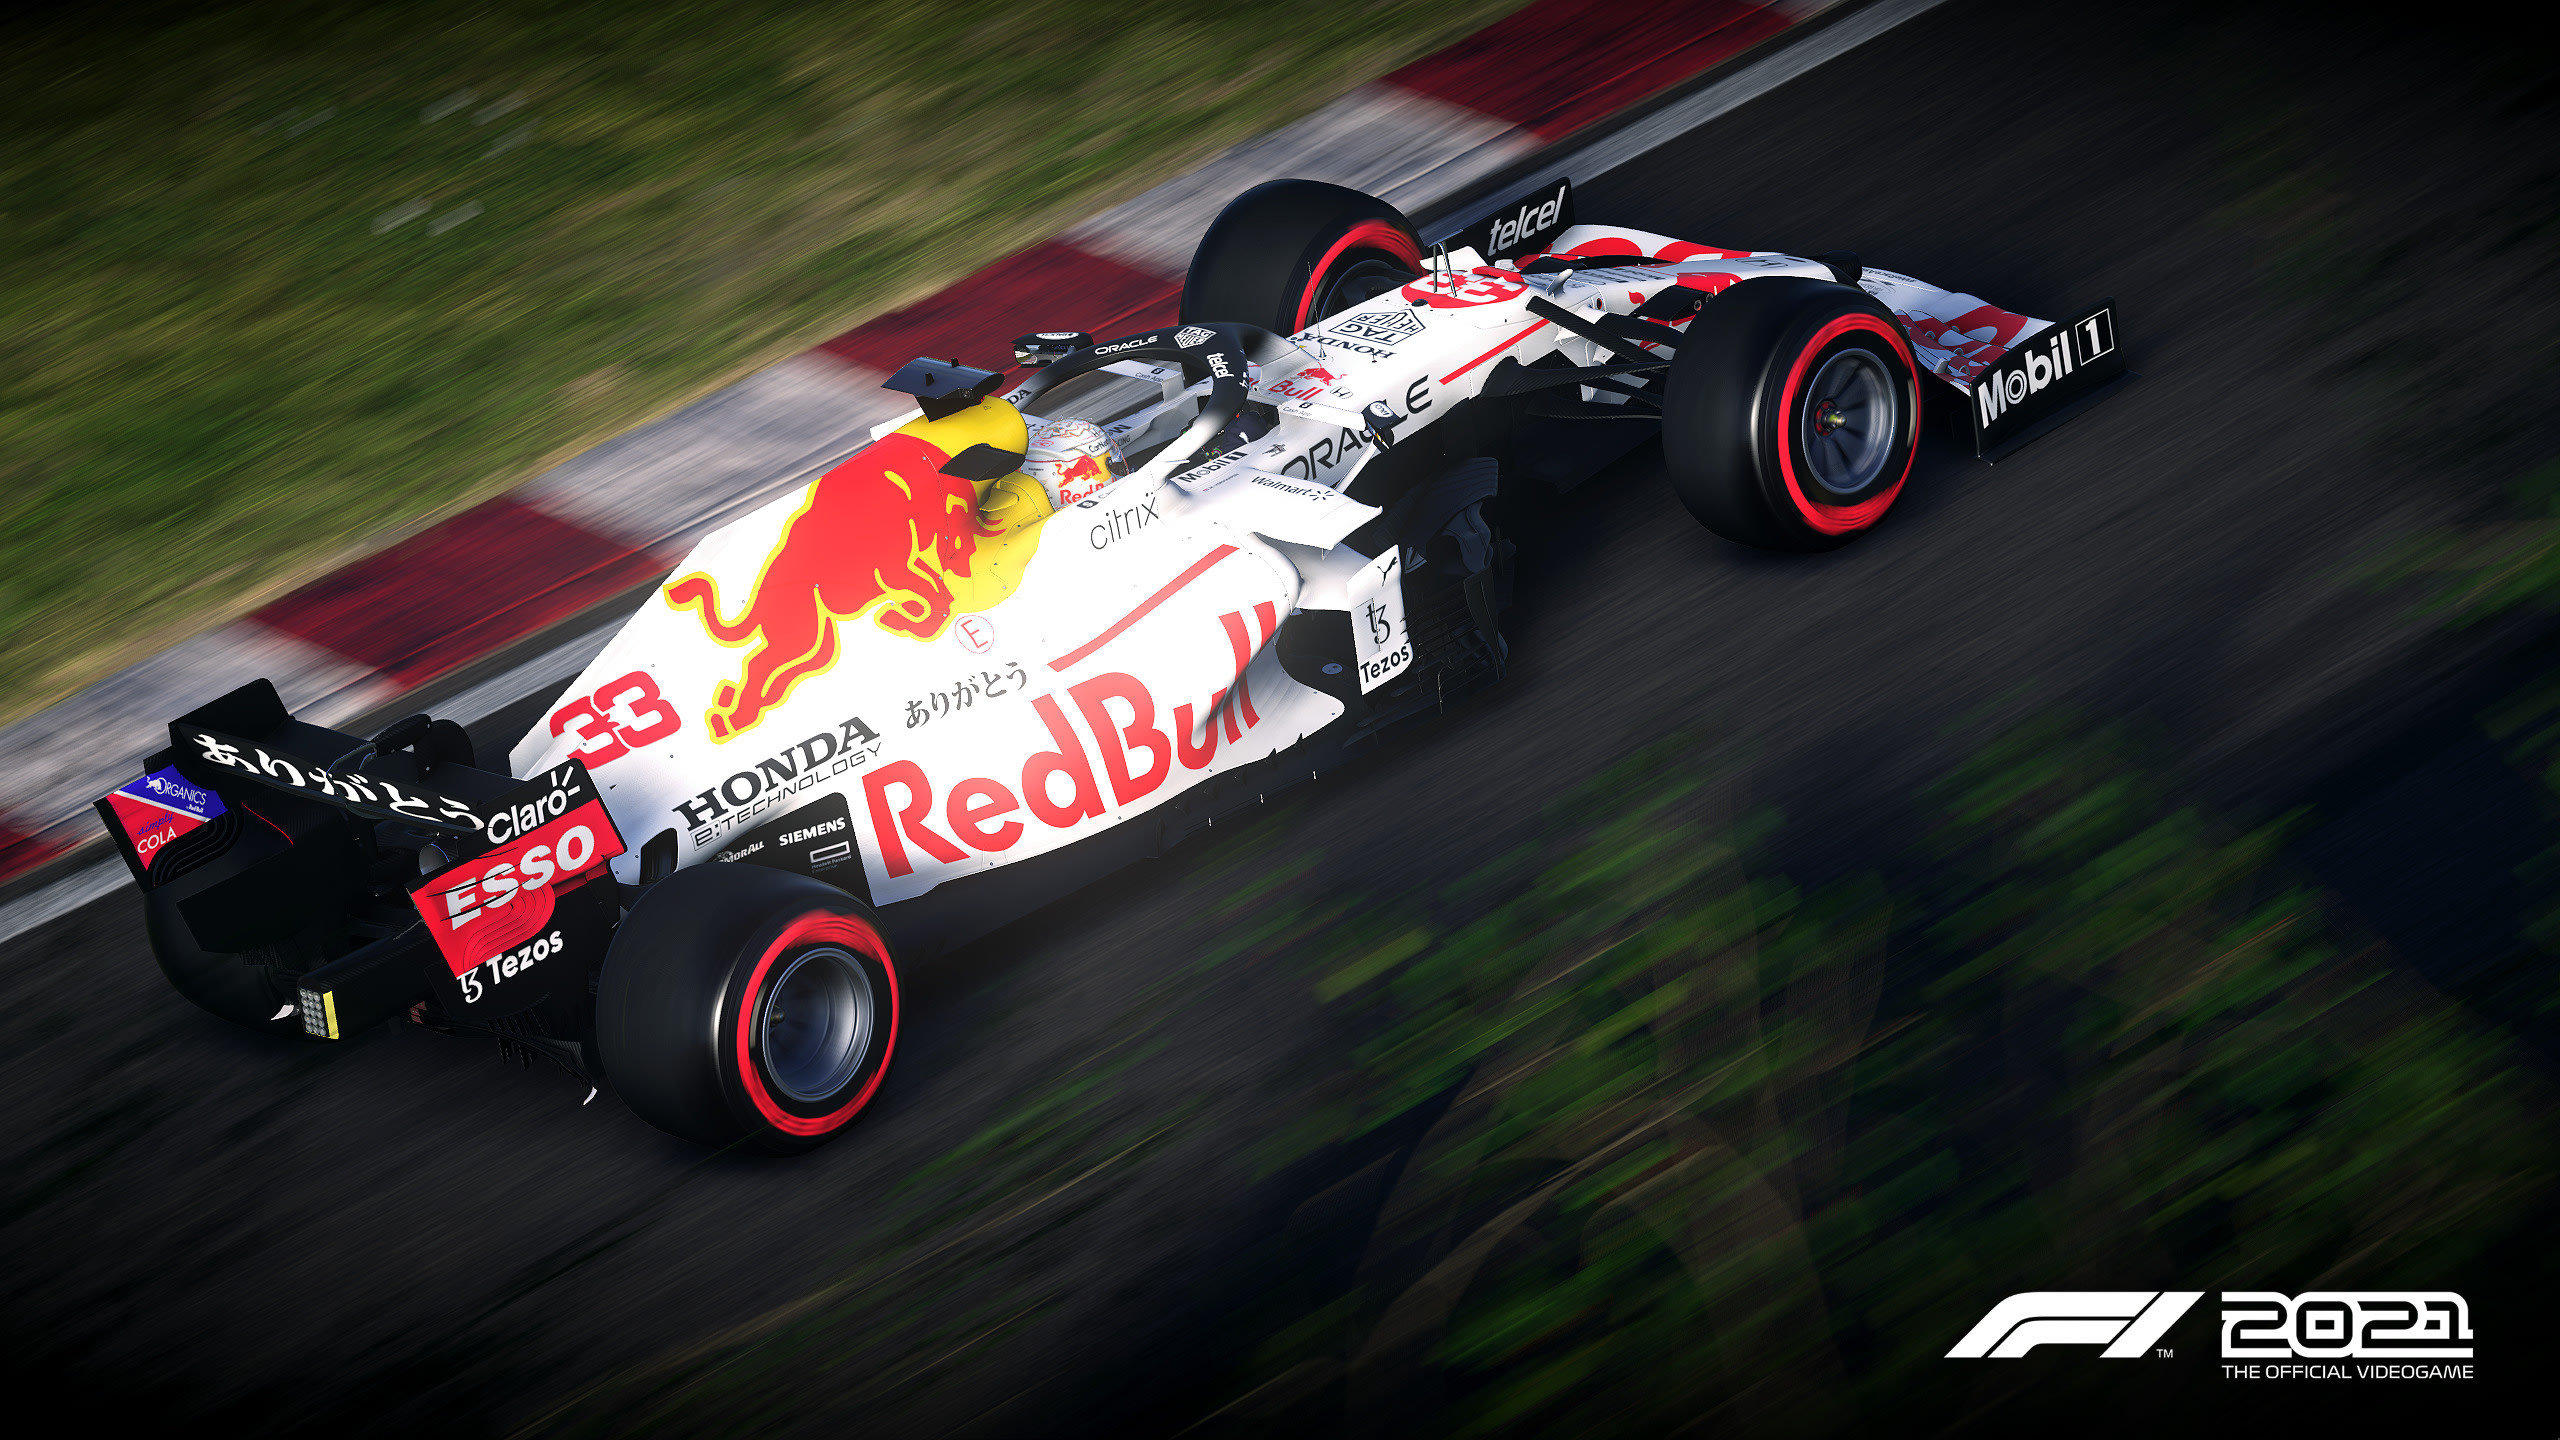 video game, f1 2021, formula 1, race car